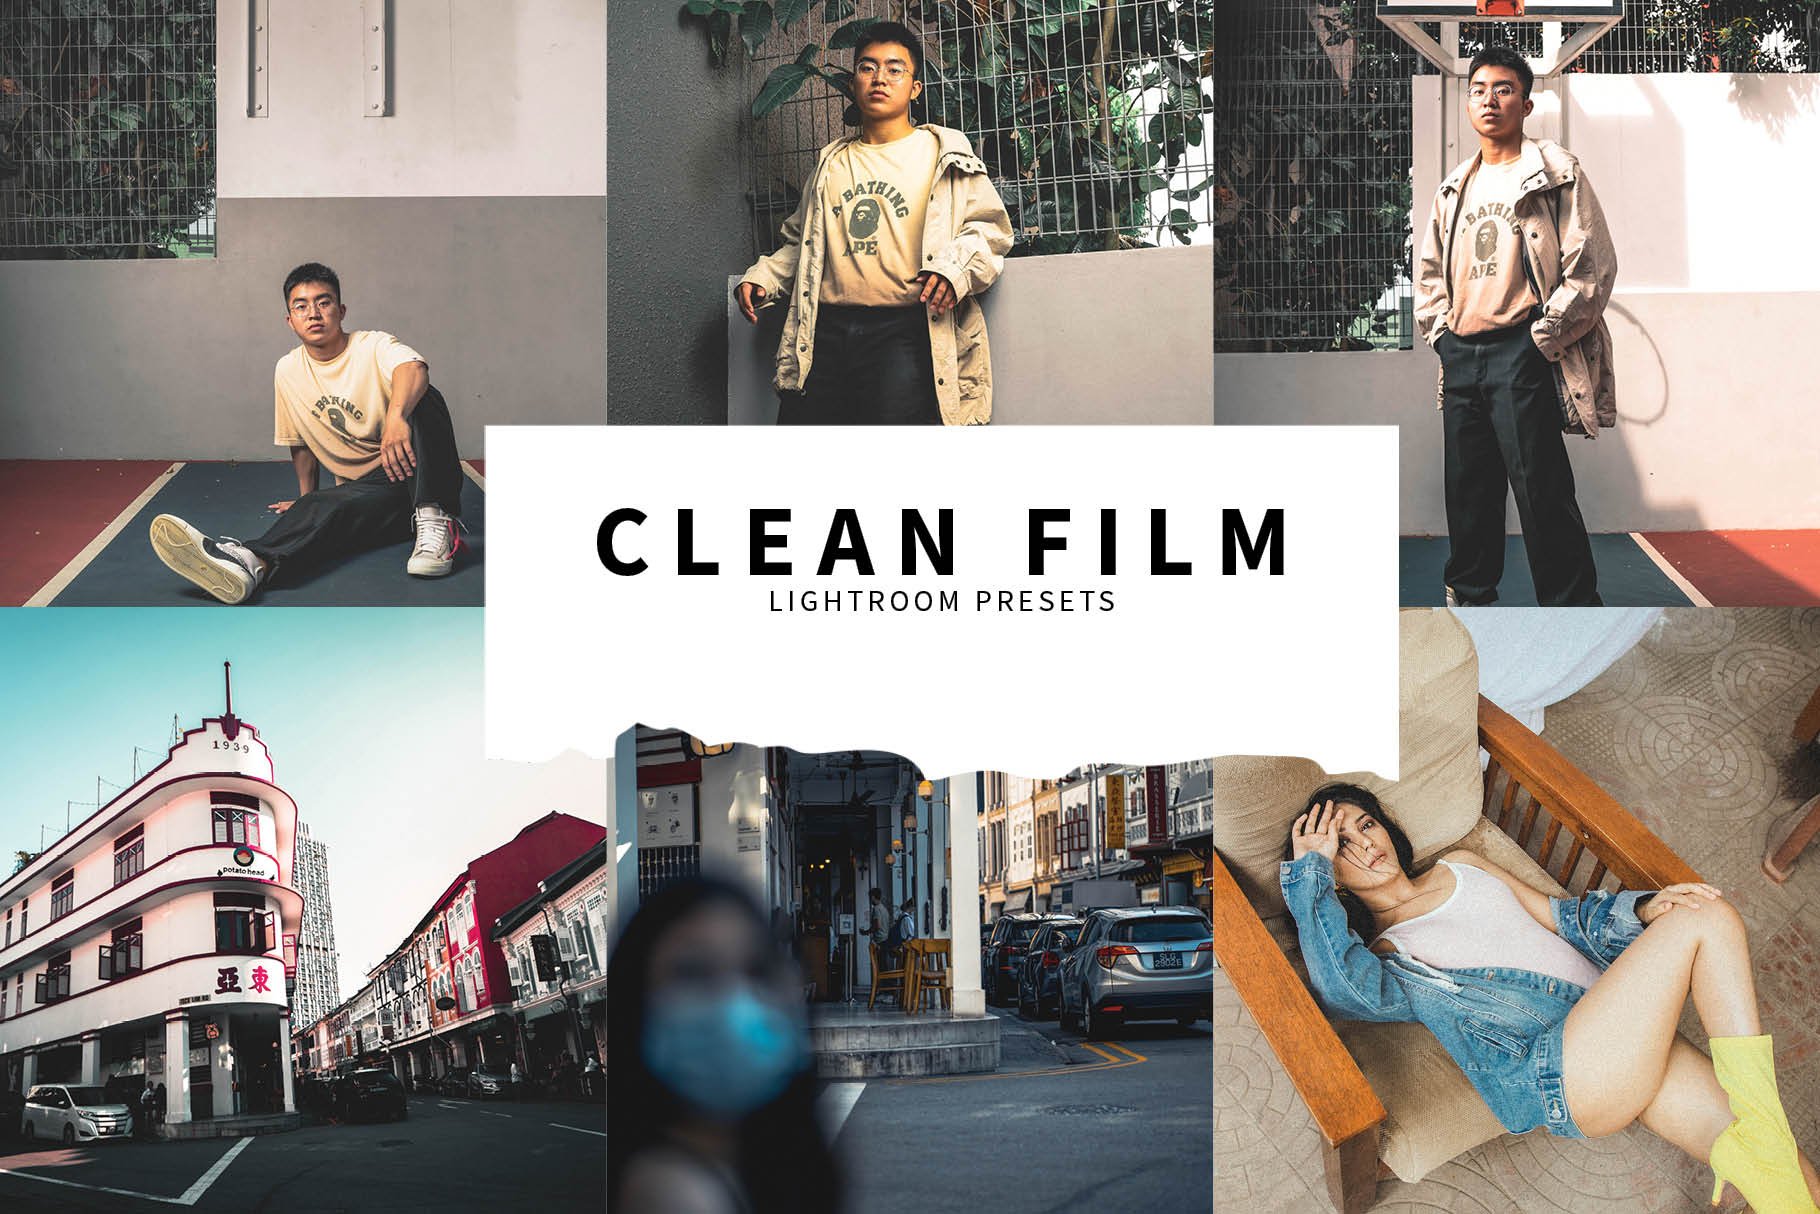 10 Clean Film Lightroom Presetscover image.